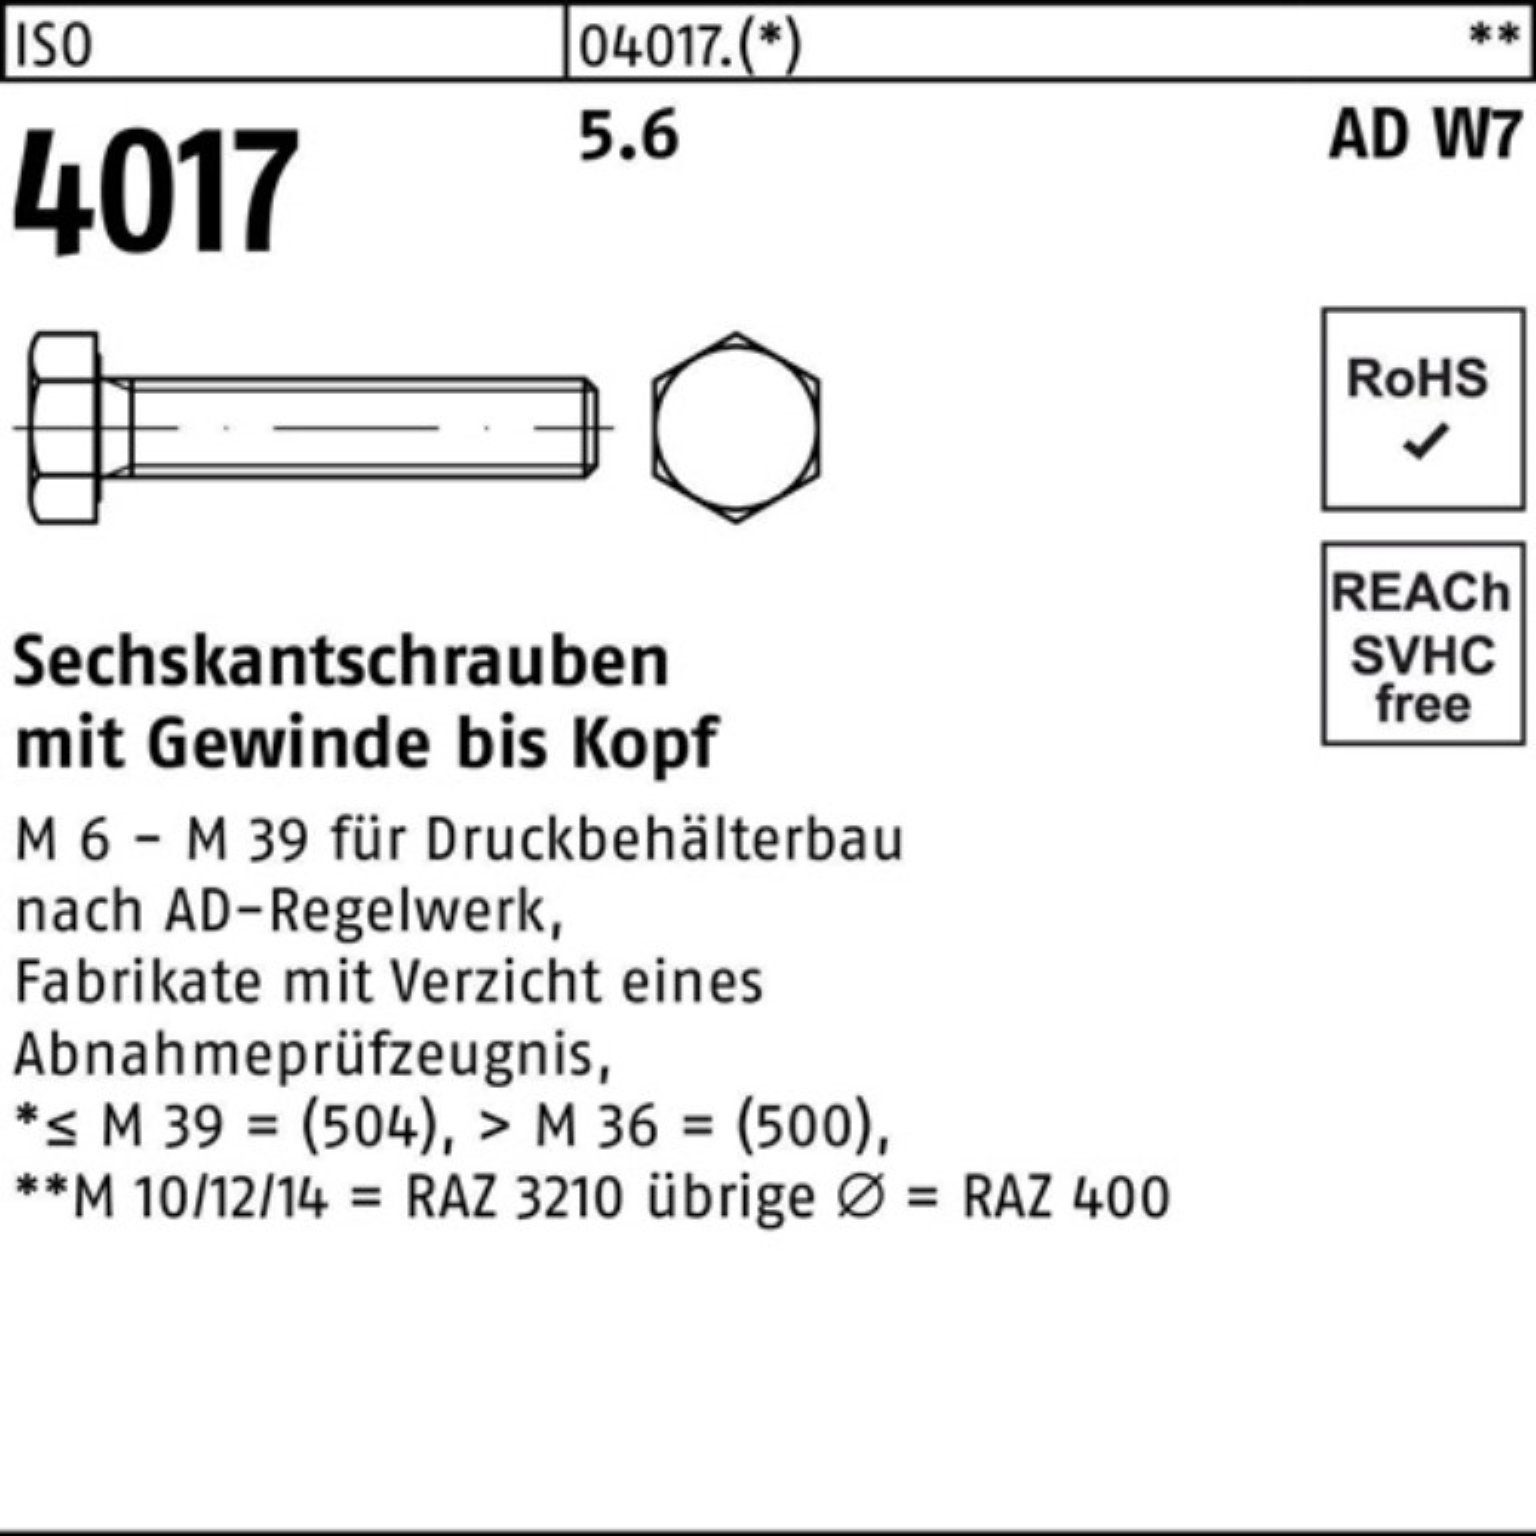 Bufab Sechskantschraube 90 1 Sechskantschraube IS 4017 M36x AD 100er W7 Pack ISO 5.6 VG Stück